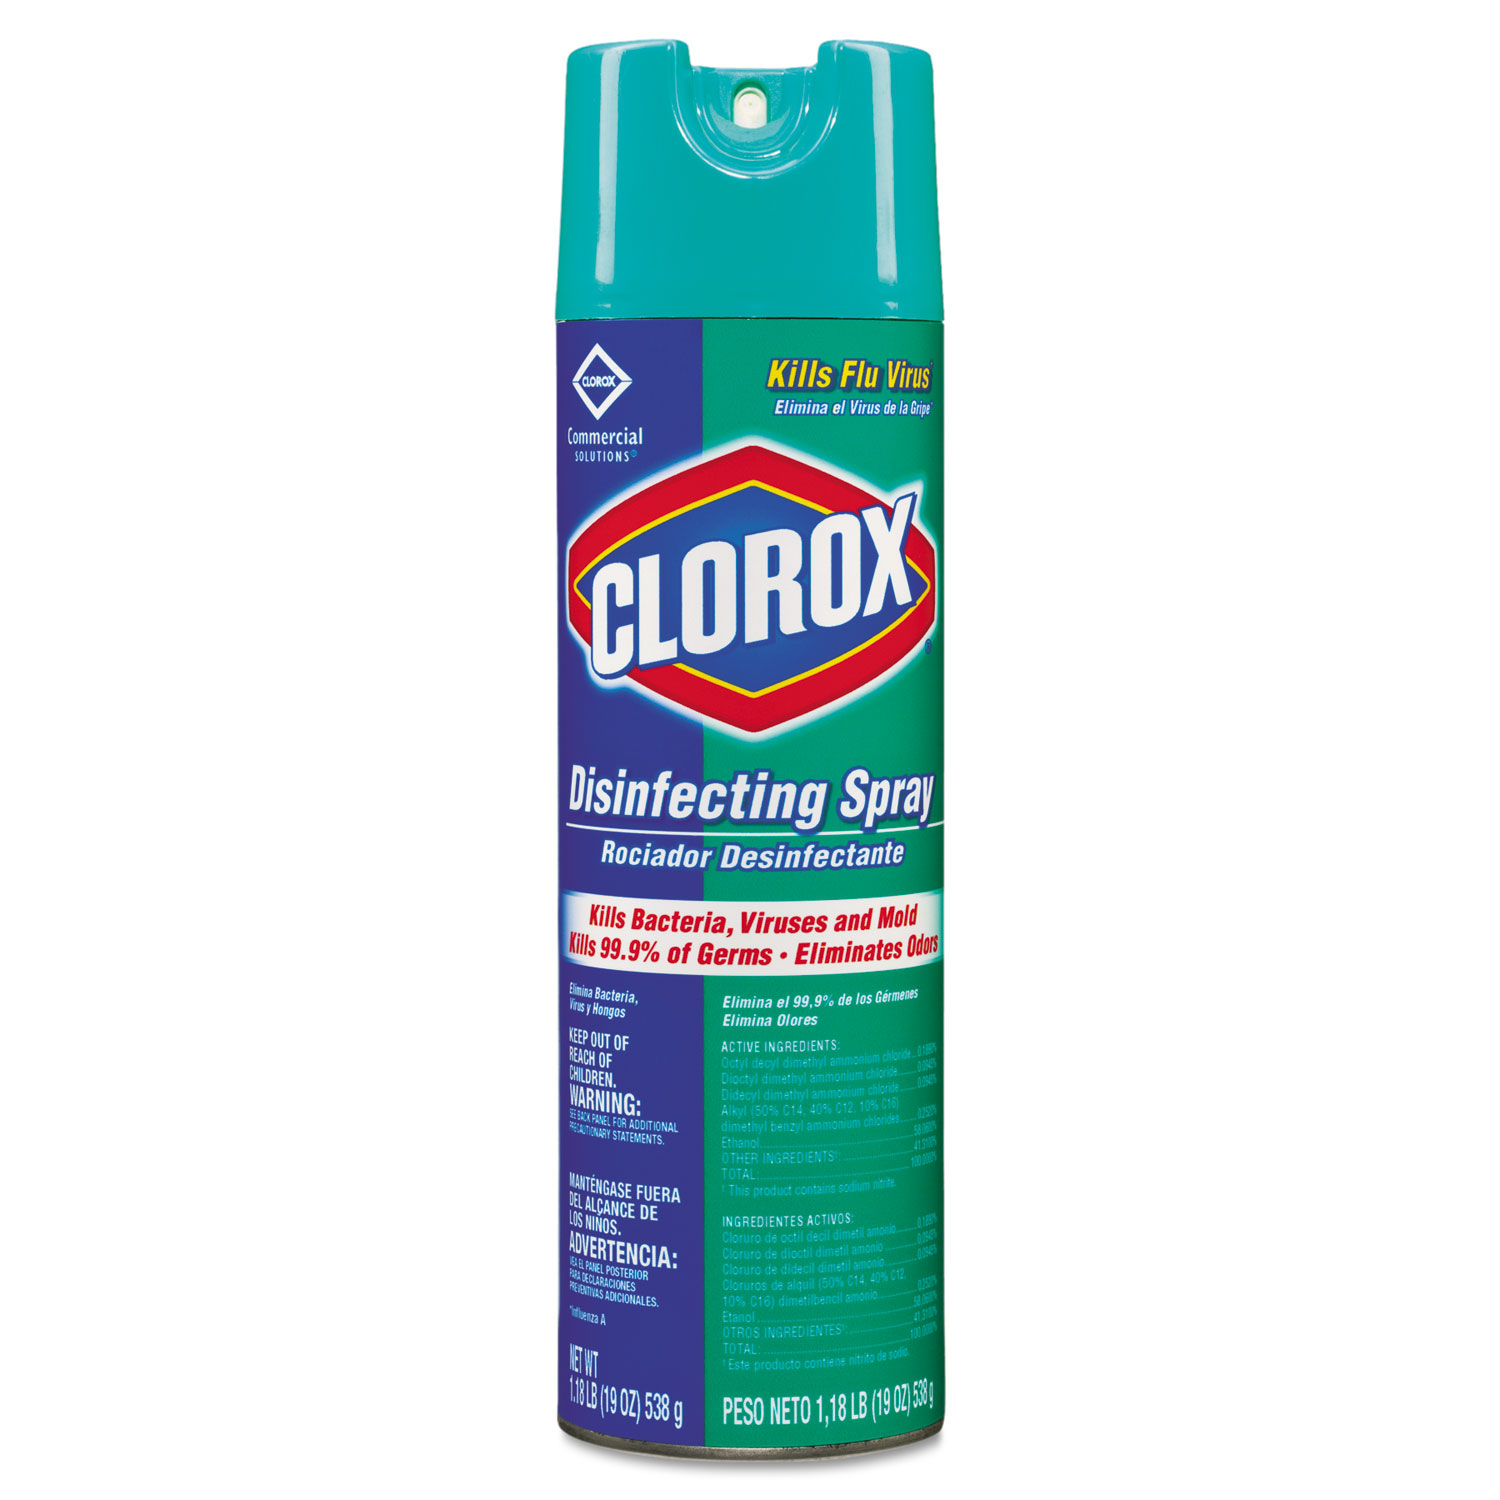 Clorox CLO38504 Disinfectant Spray, 19oz Aerosol